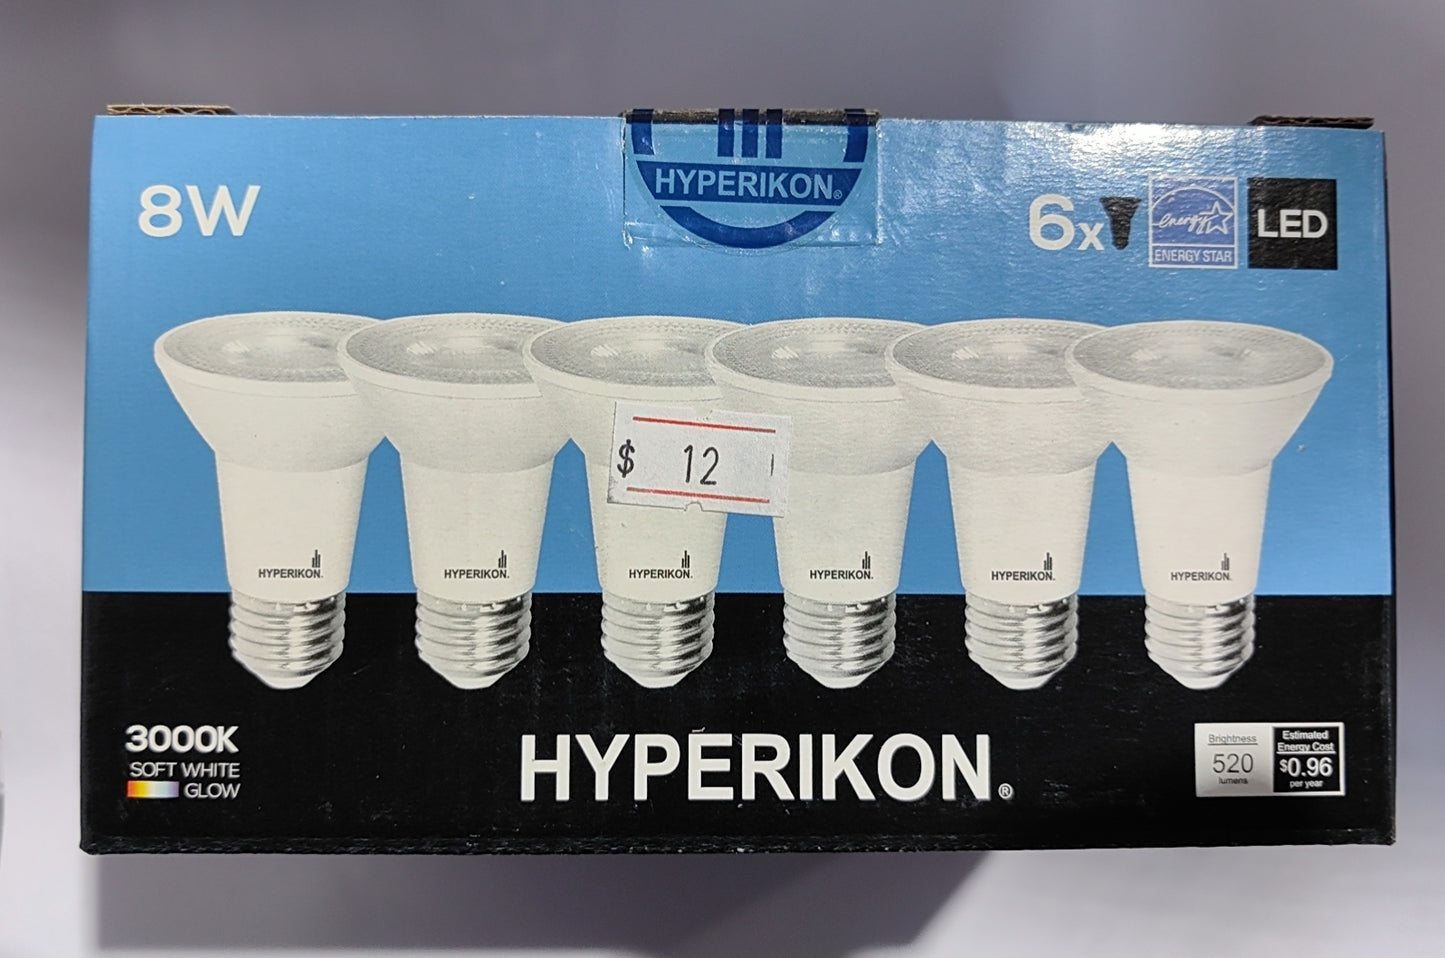 HYPERIKON LED PAR20 LIGHT BULB 8W WARM WHITE 3000K 6PCS/BOX $12/BOX